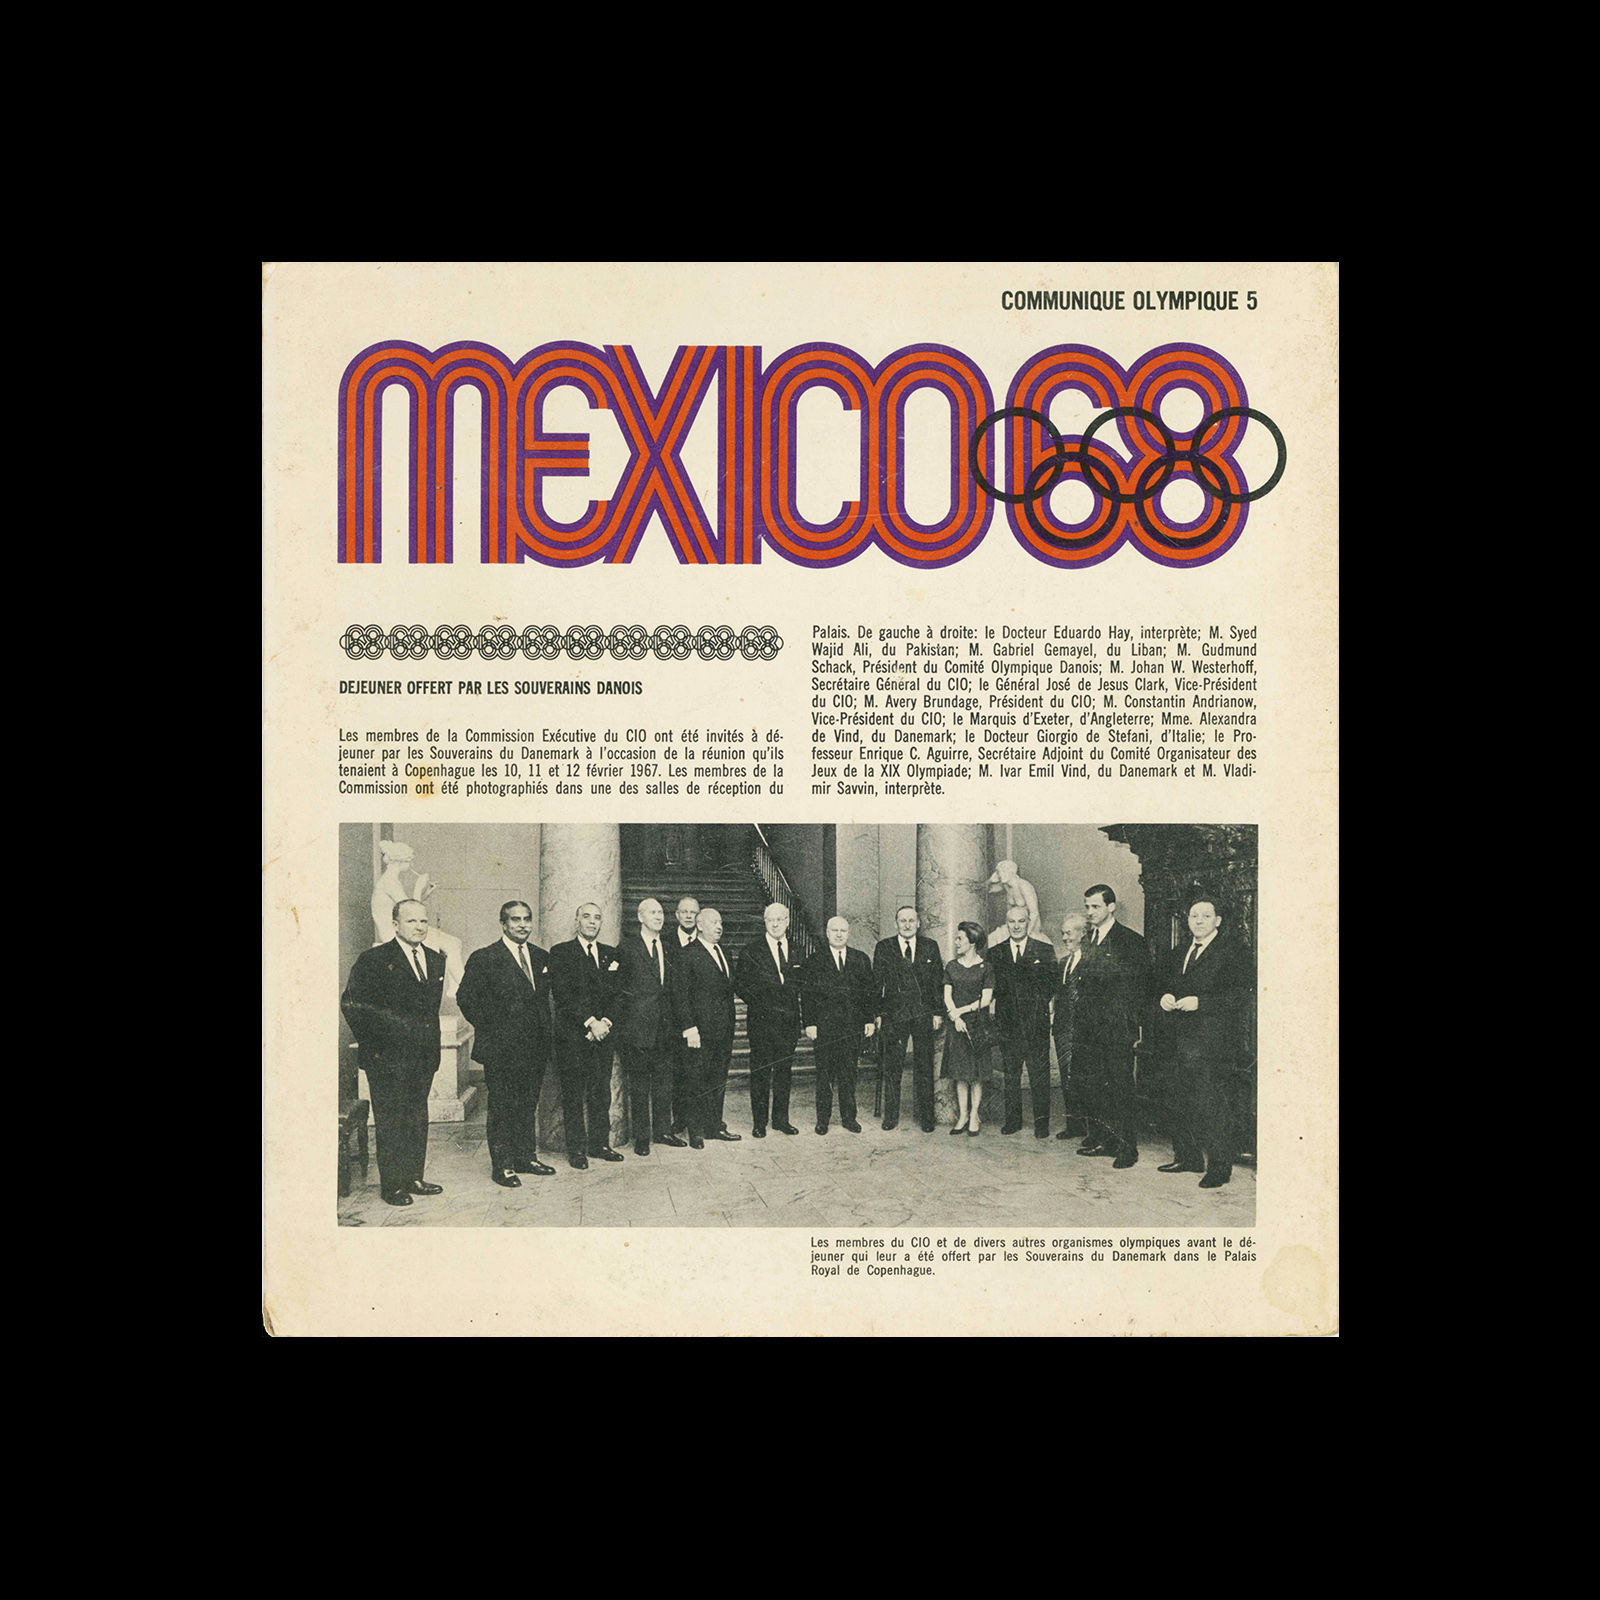 Mexico 1968, Communique Olympique 5, 1968. Designed by Lance Wyman